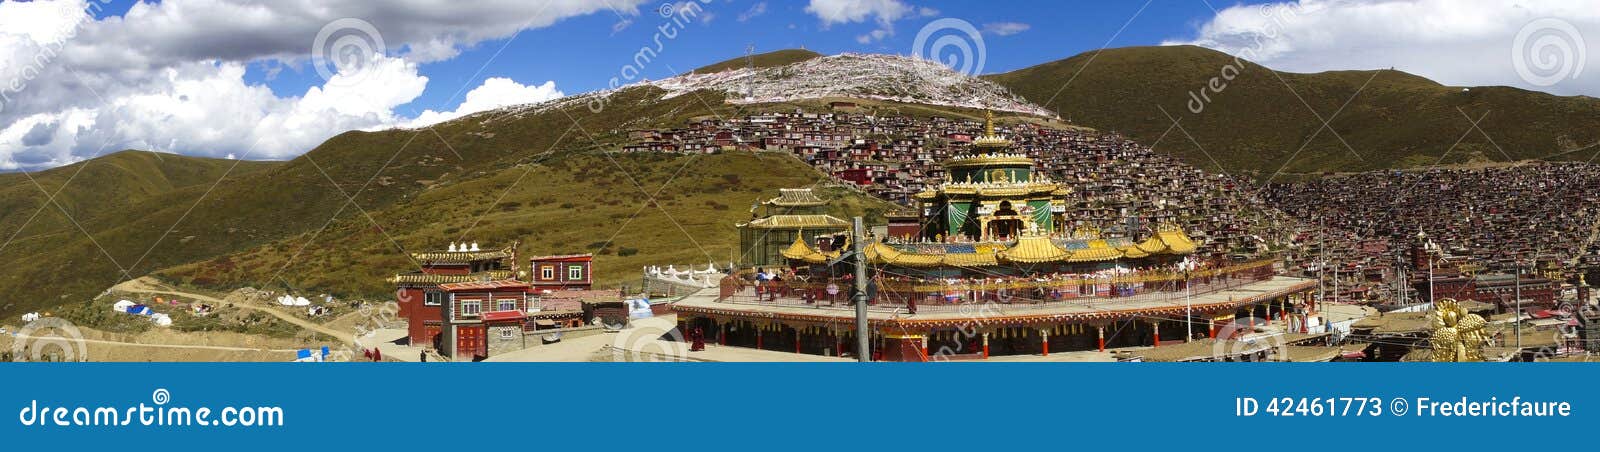 panorama on buddhist forbidden city of serta, tibet